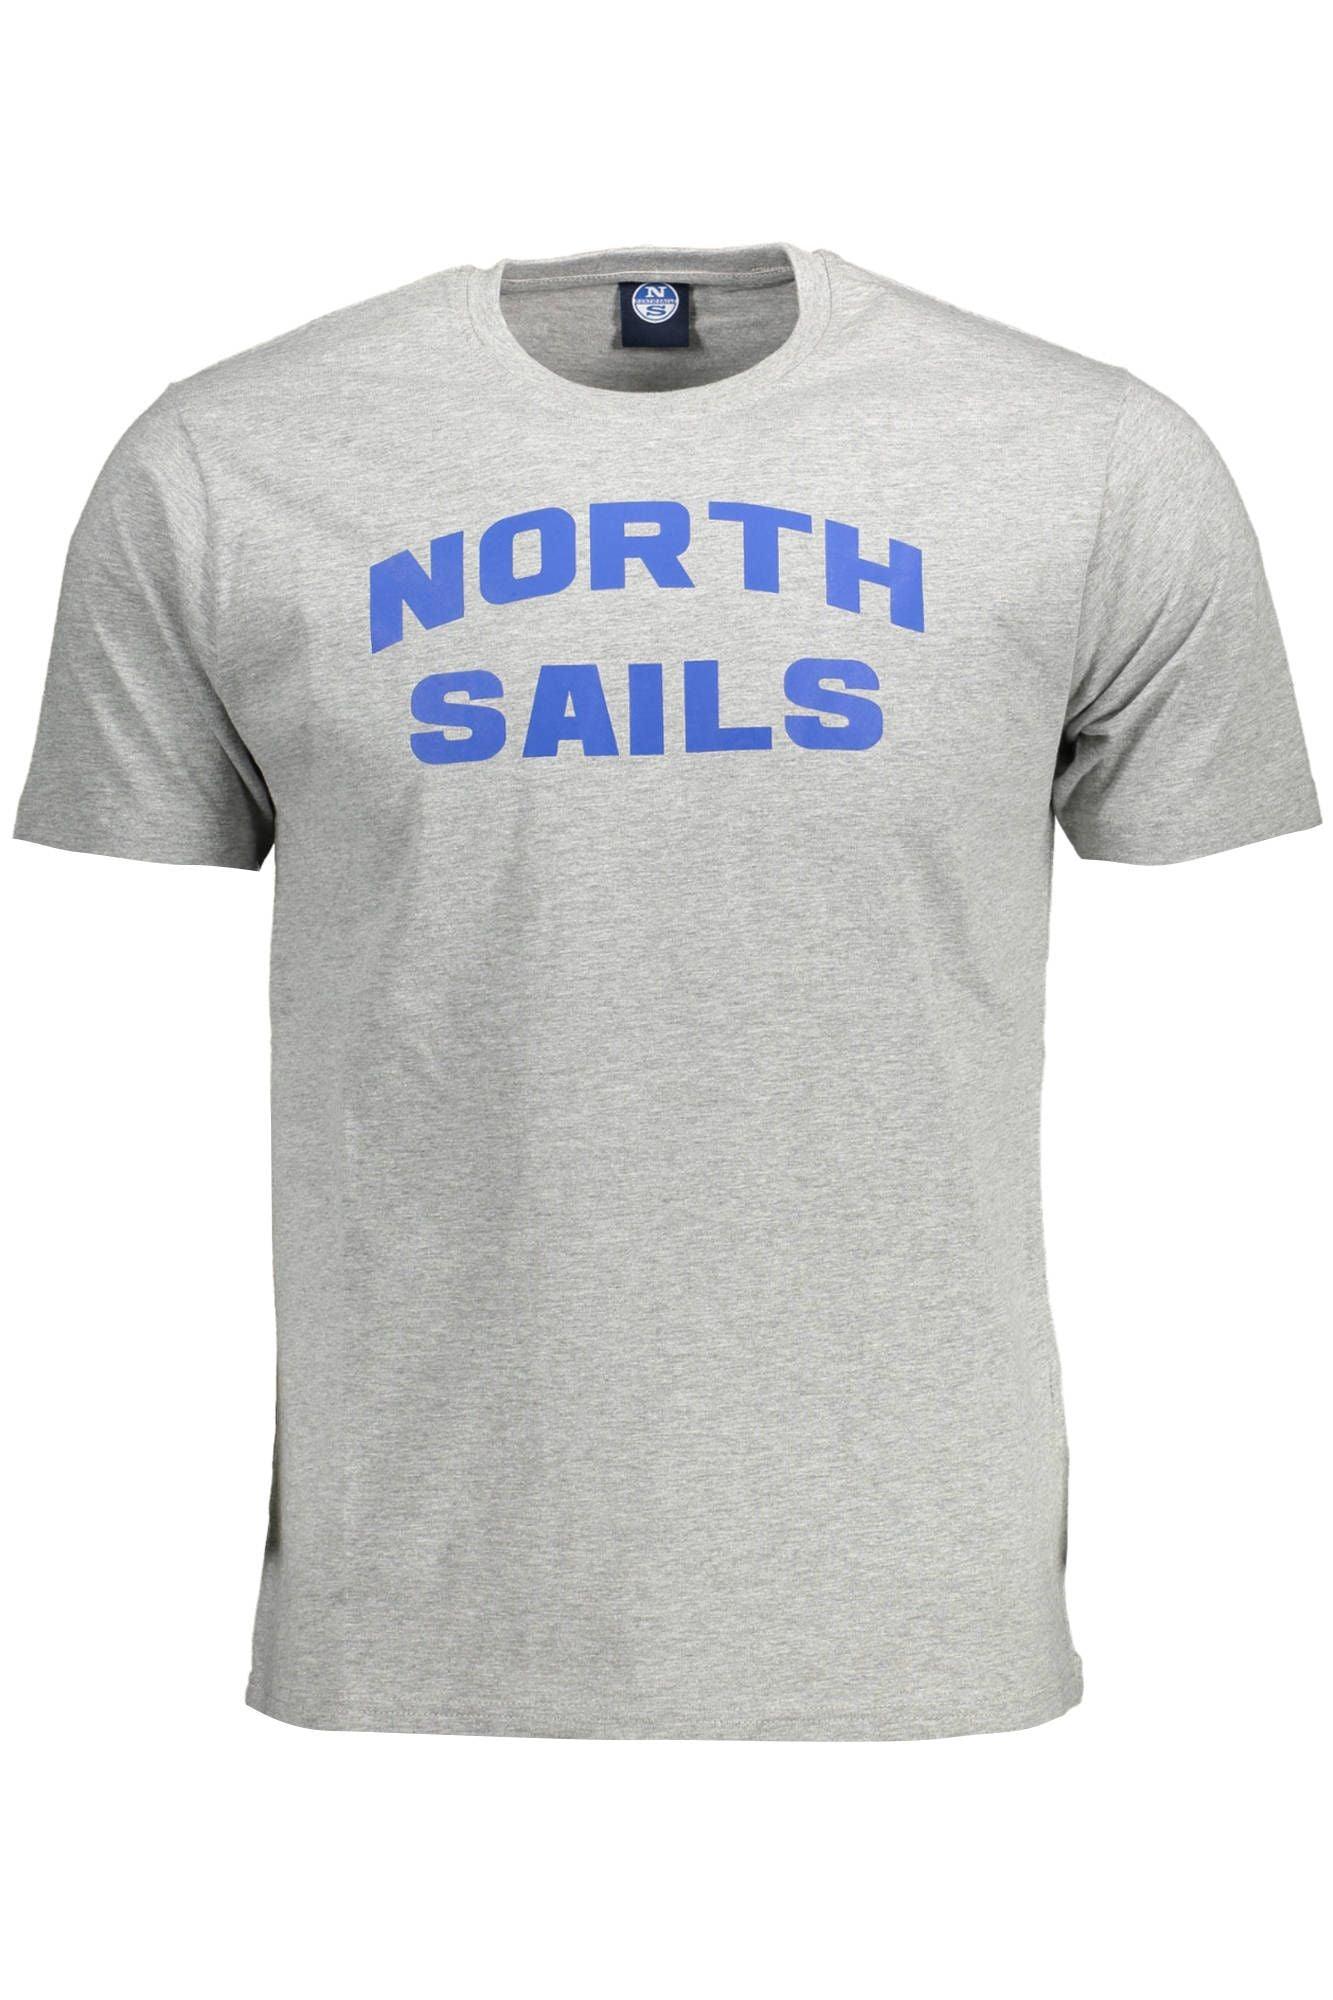 North Sails Chic Gray Crew Neck Statement Tee - PER.FASHION